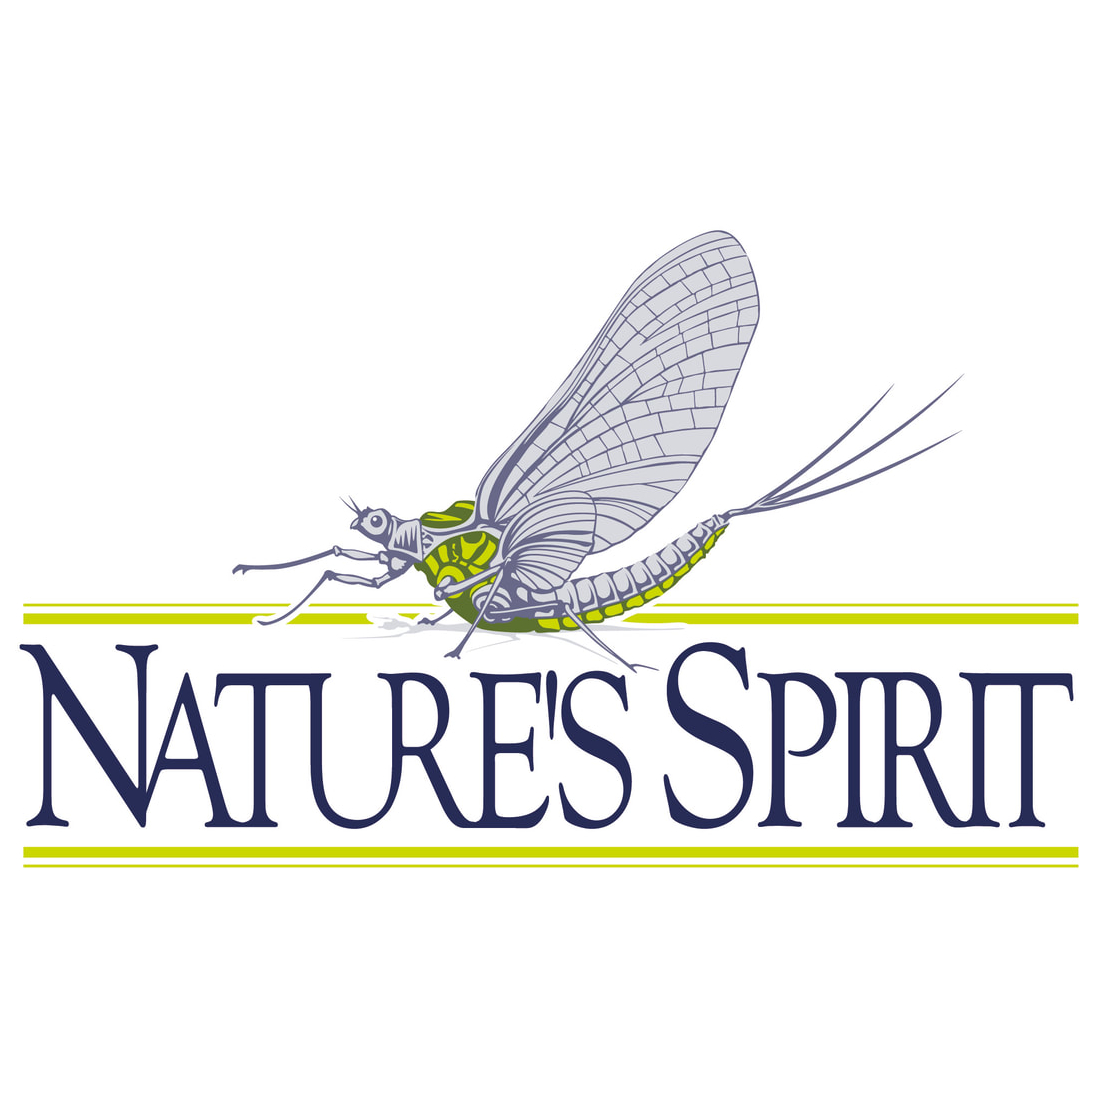 Nature’s Spirit hos Flugbindning.com